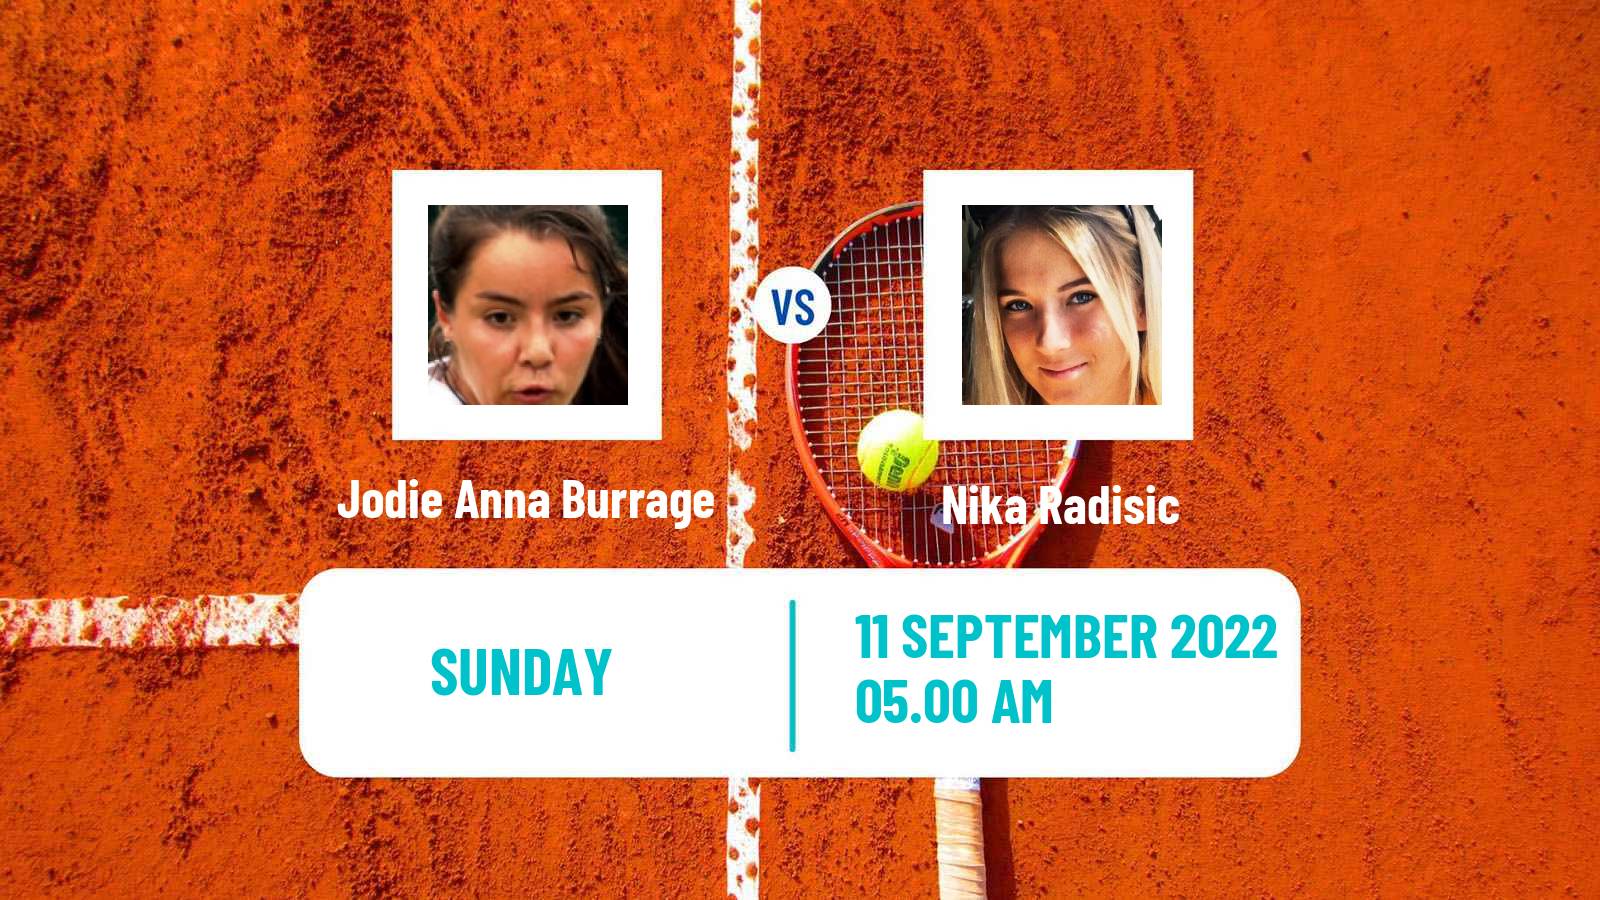 Tennis WTA Portoroz Jodie Anna Burrage - Nika Radisic